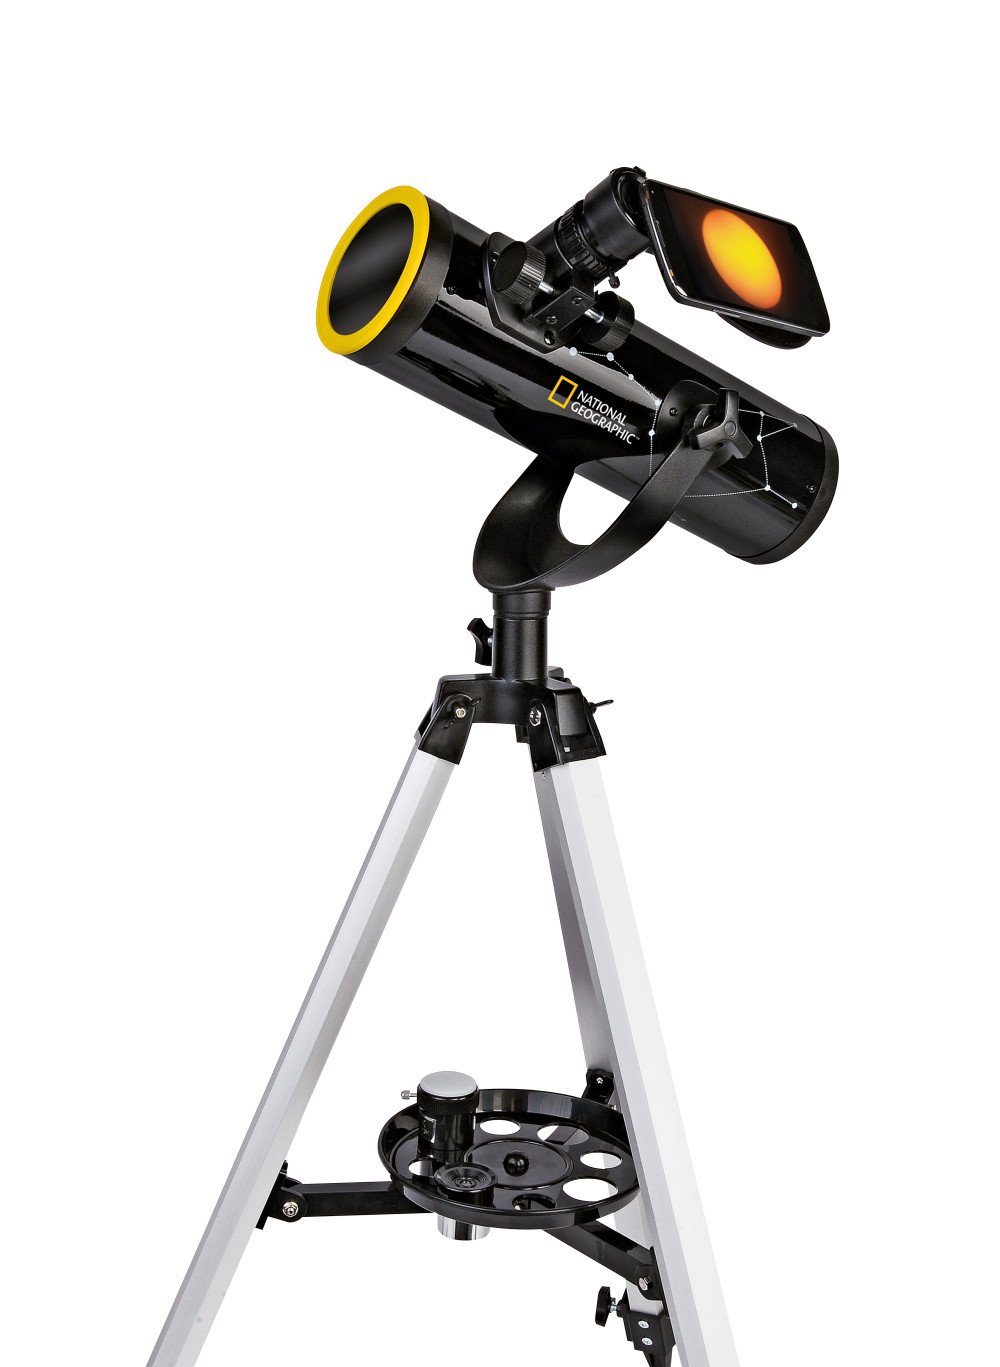 NATIONAL GEOGRAPHIC 76/350 teleszkóp napszűrővel